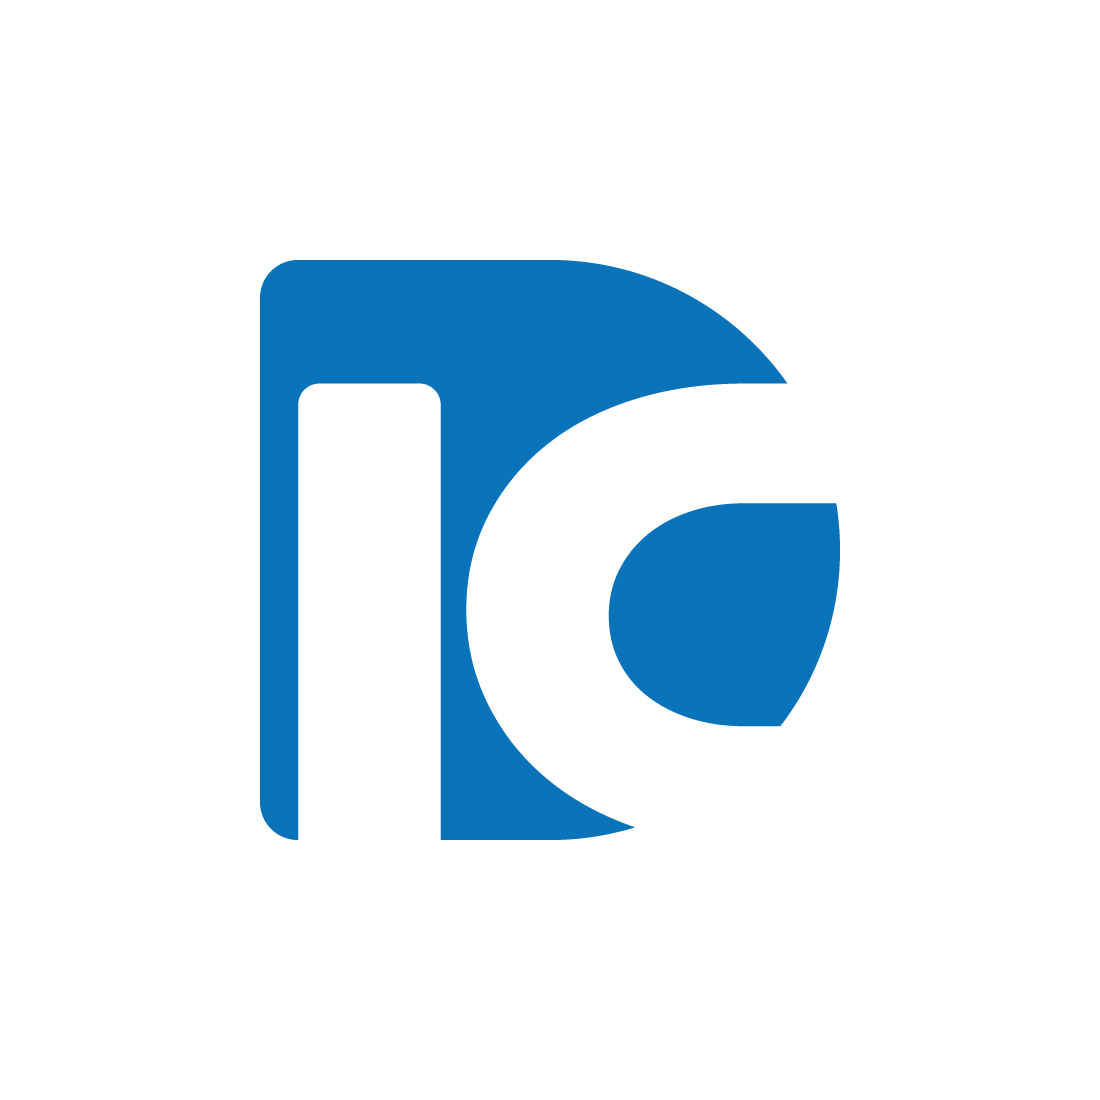 IDC logo preview image.